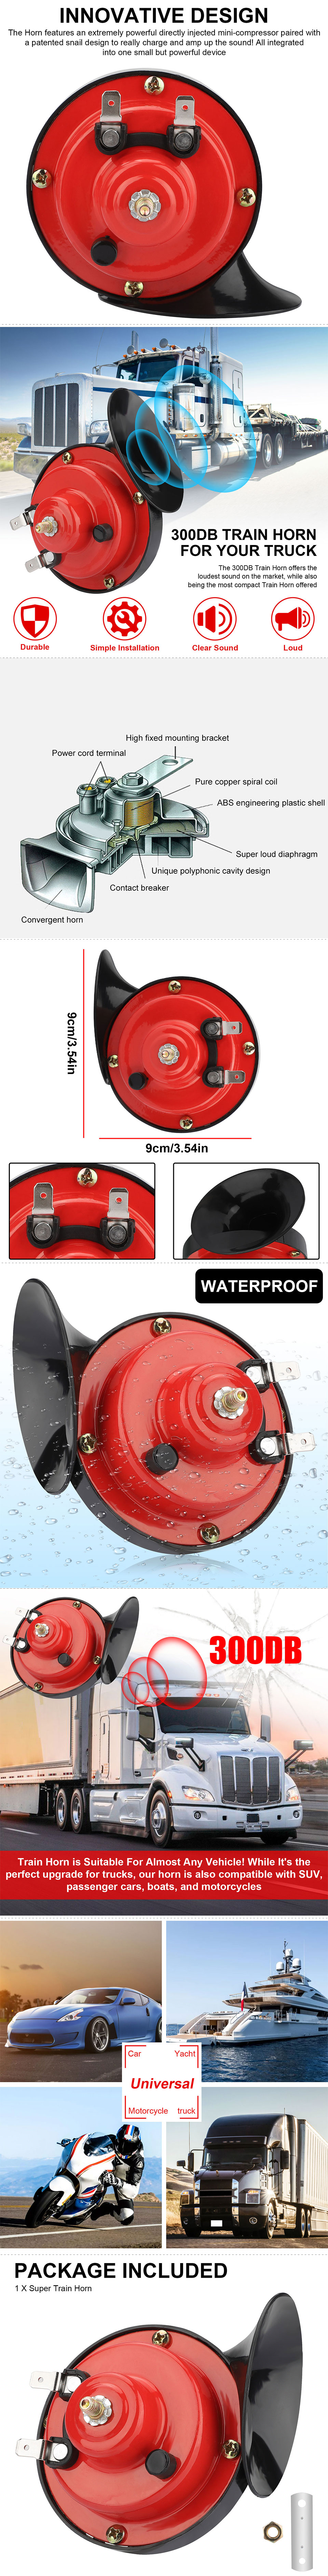 12V 300DB Super Loud Train Horn Waterproof for Motorcycle Car